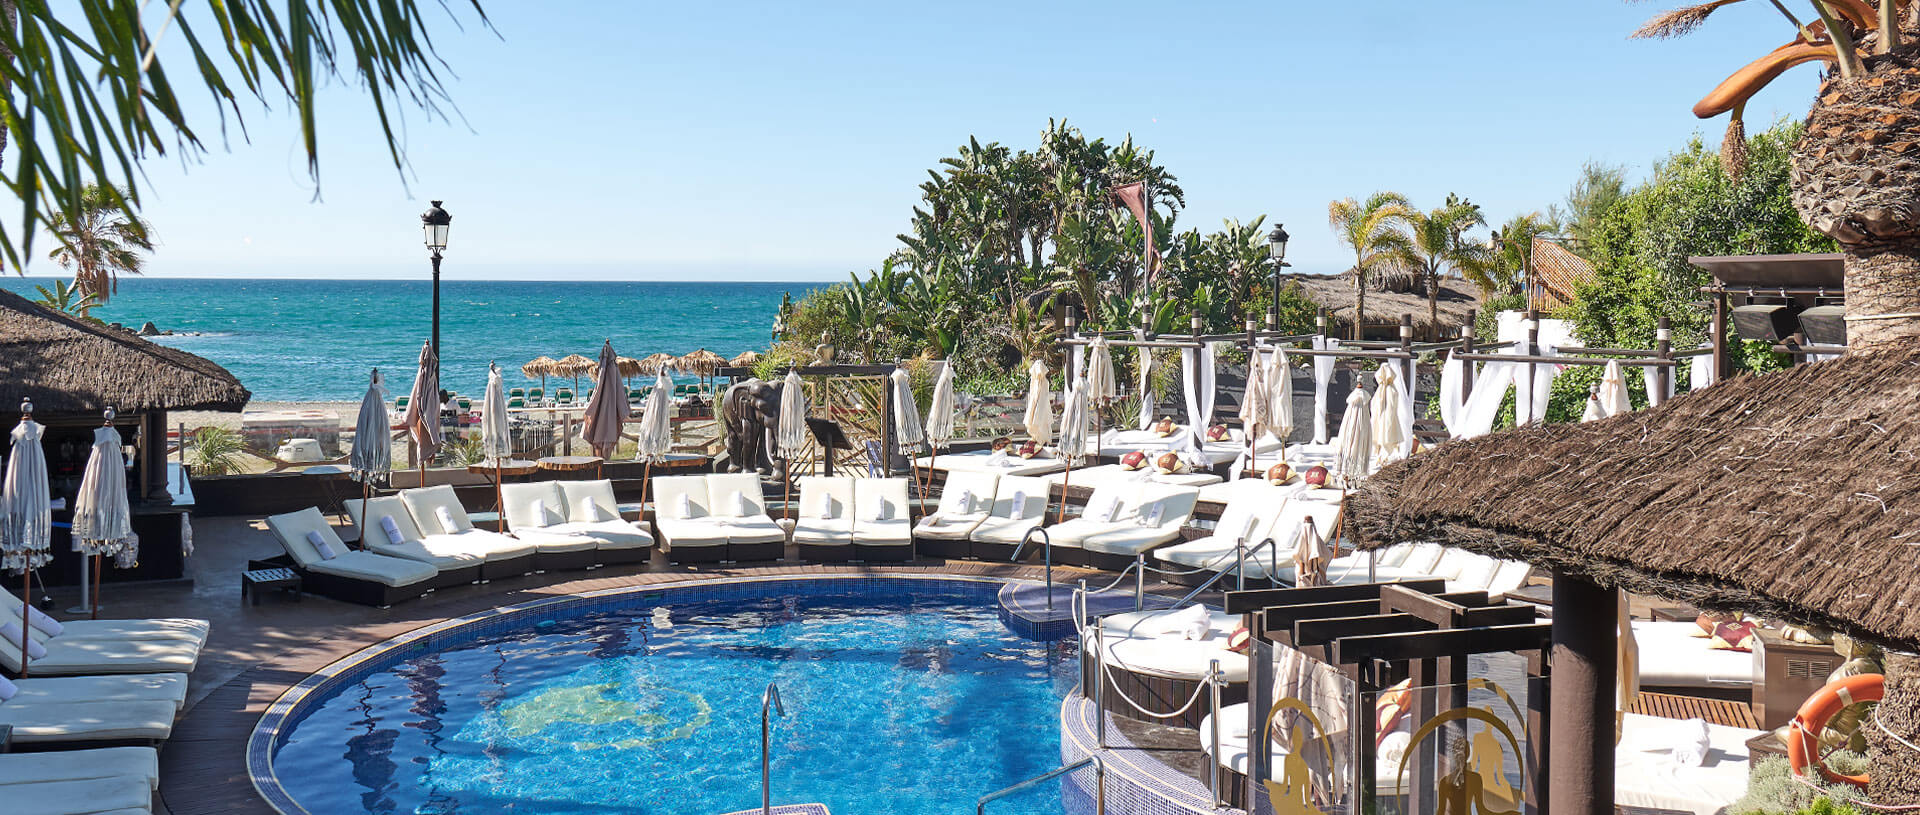 Number 1 Beach Club & Restaurant in Marbella